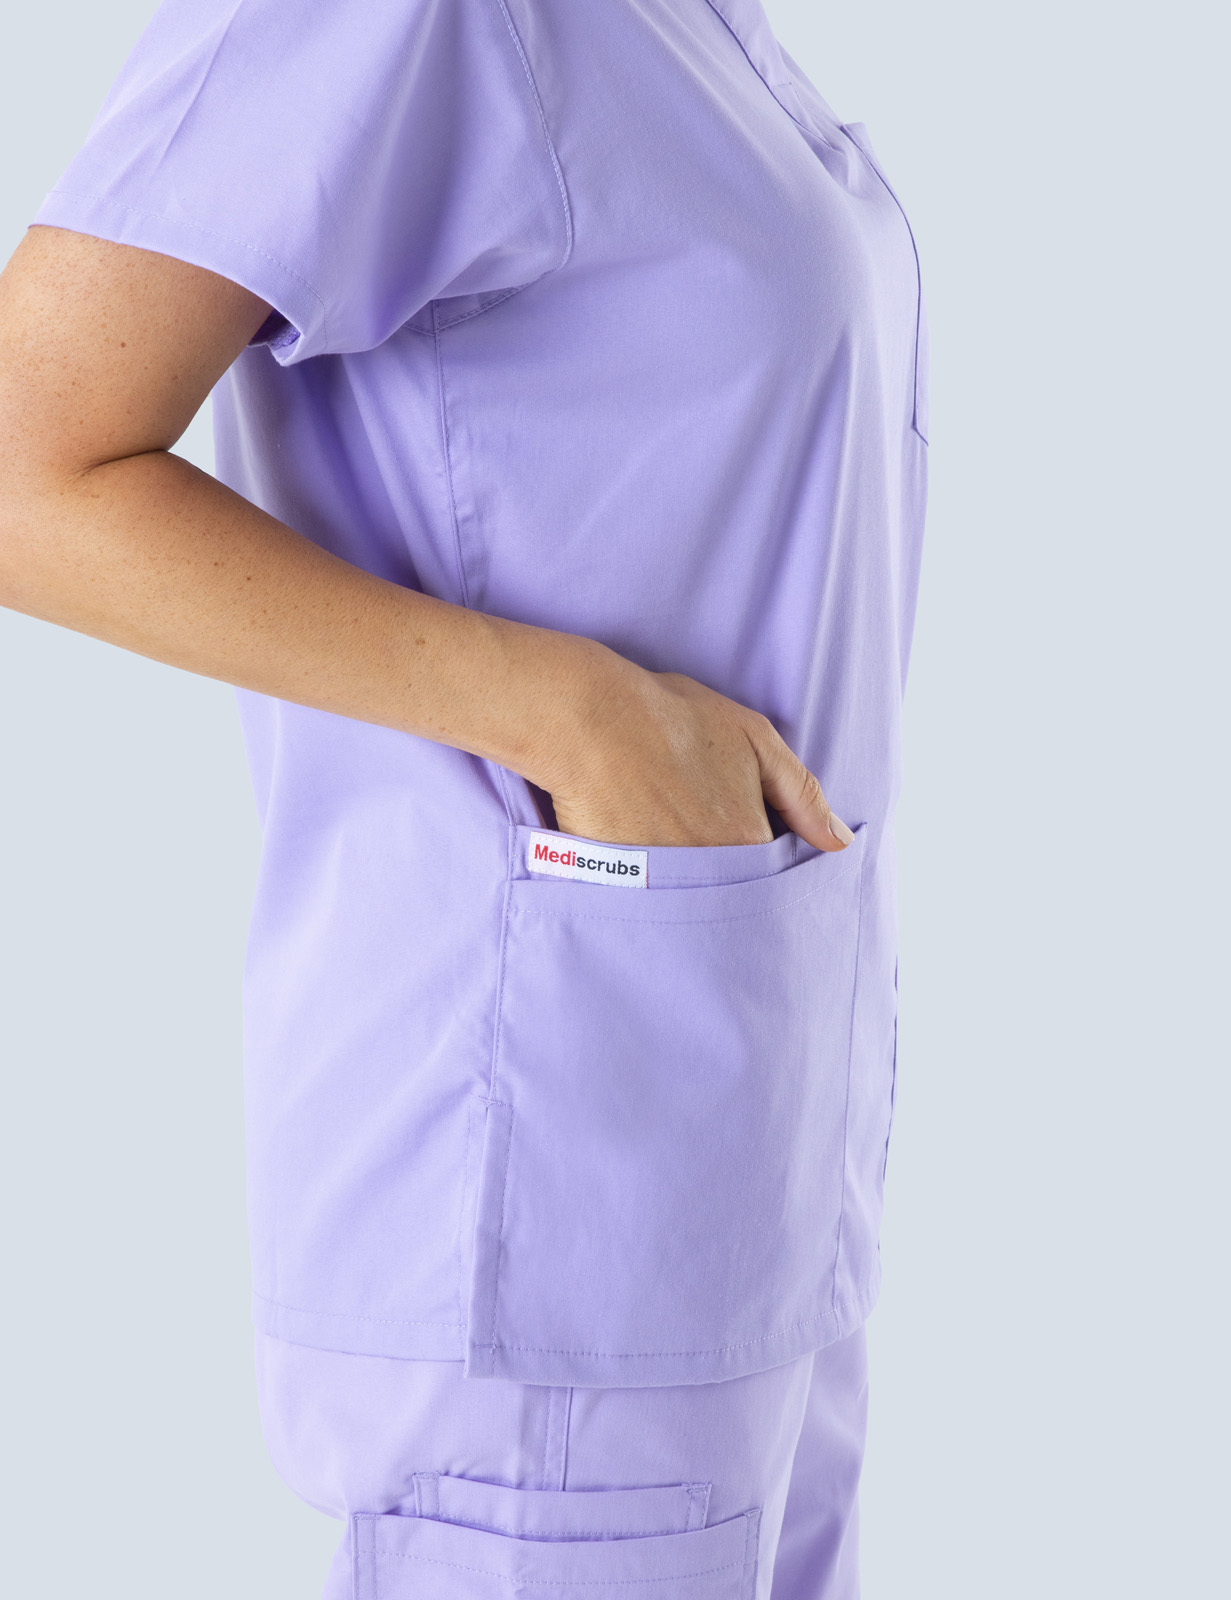 Queensland Children's Hospital Emergency Department Registered  Nurse  Uniform Top Bundle  (4 Pocket Top in Lilac incl Logos)